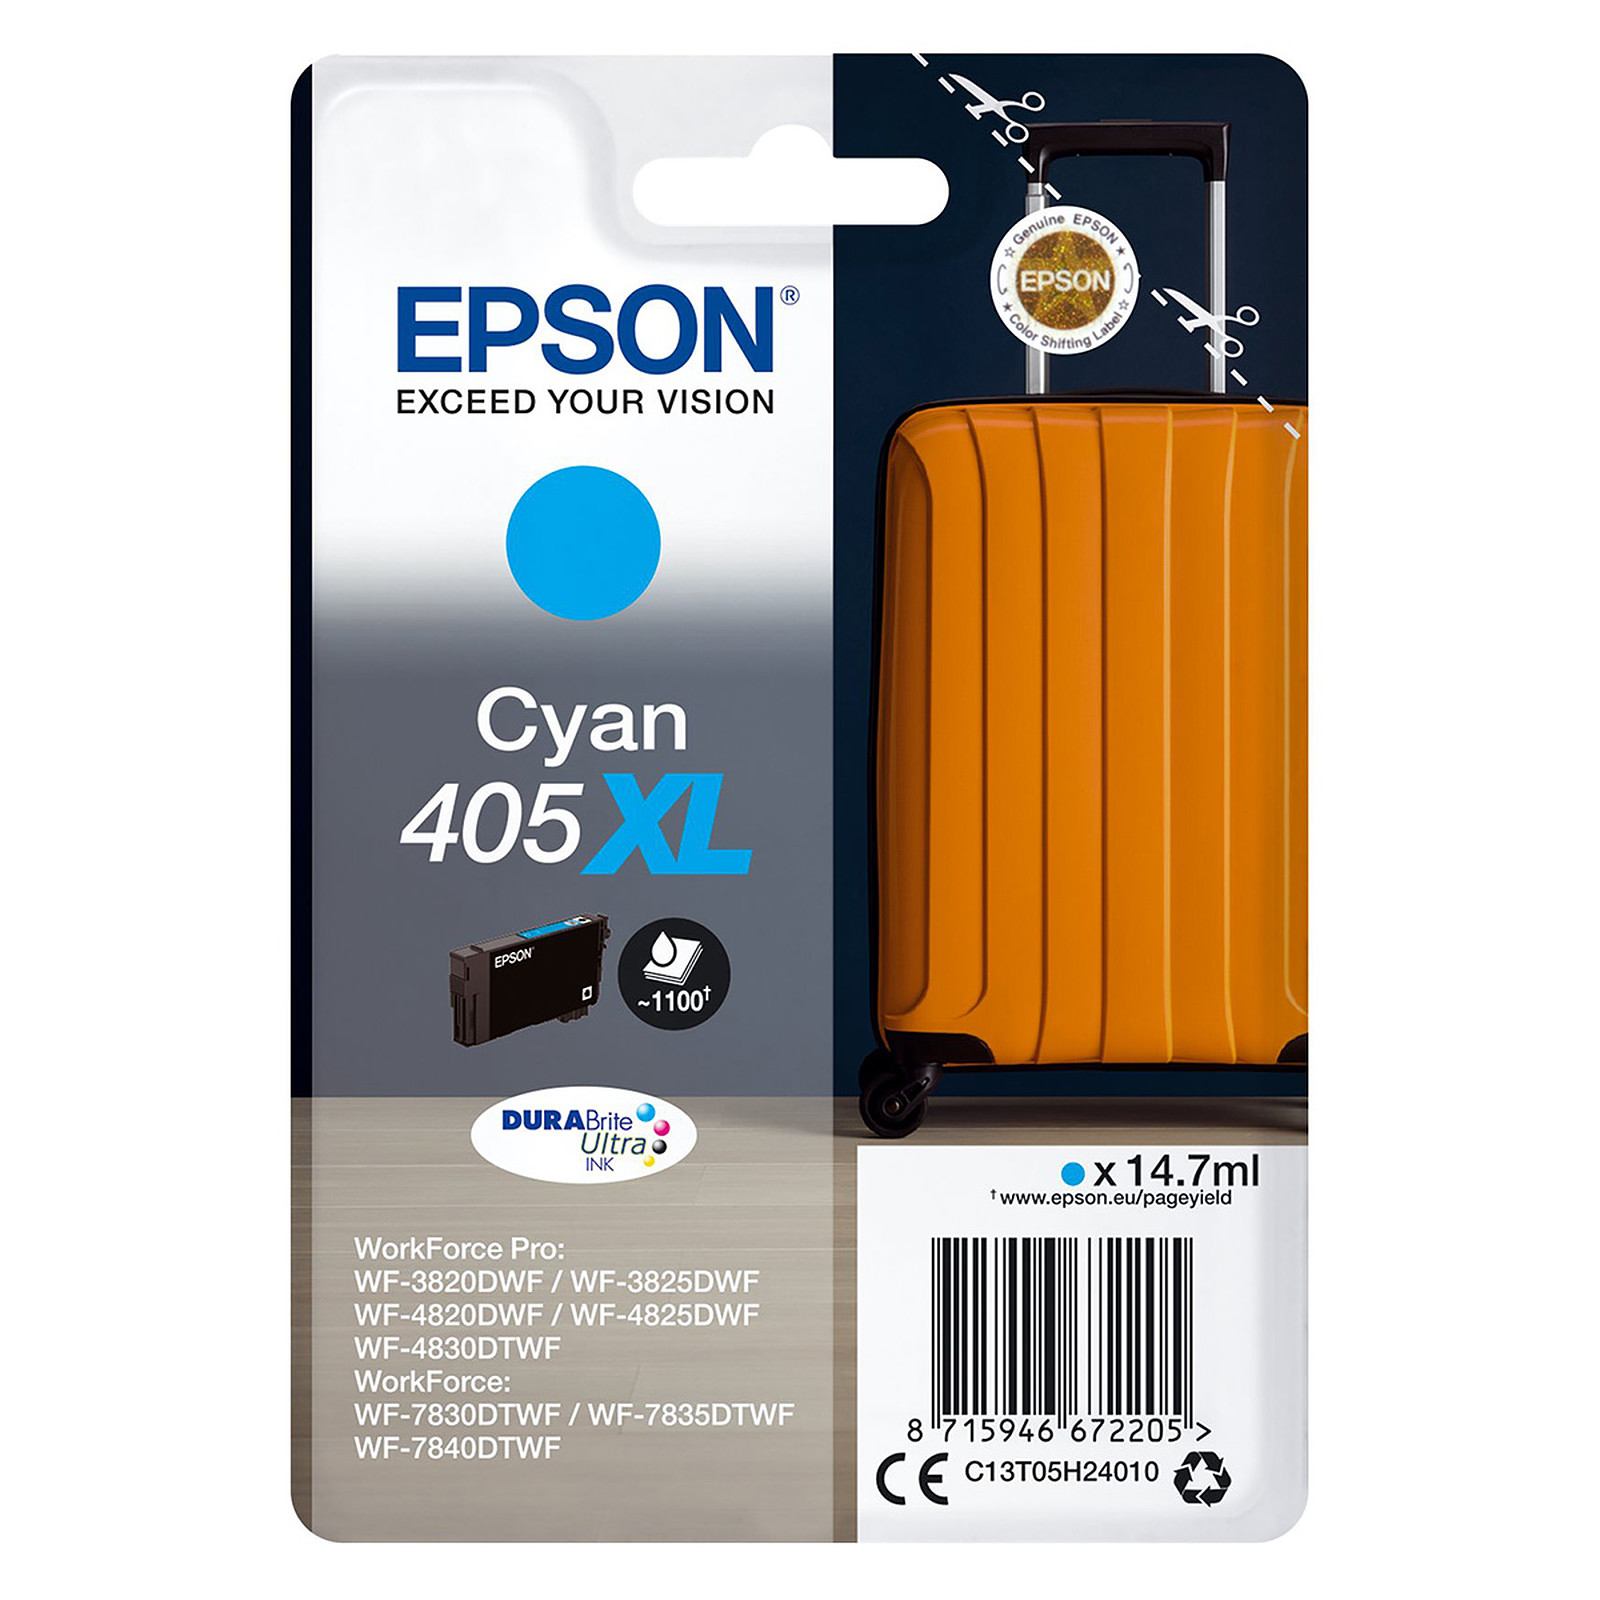 Epson Valise 405XL Cyan - Cartouche imprimante Epson